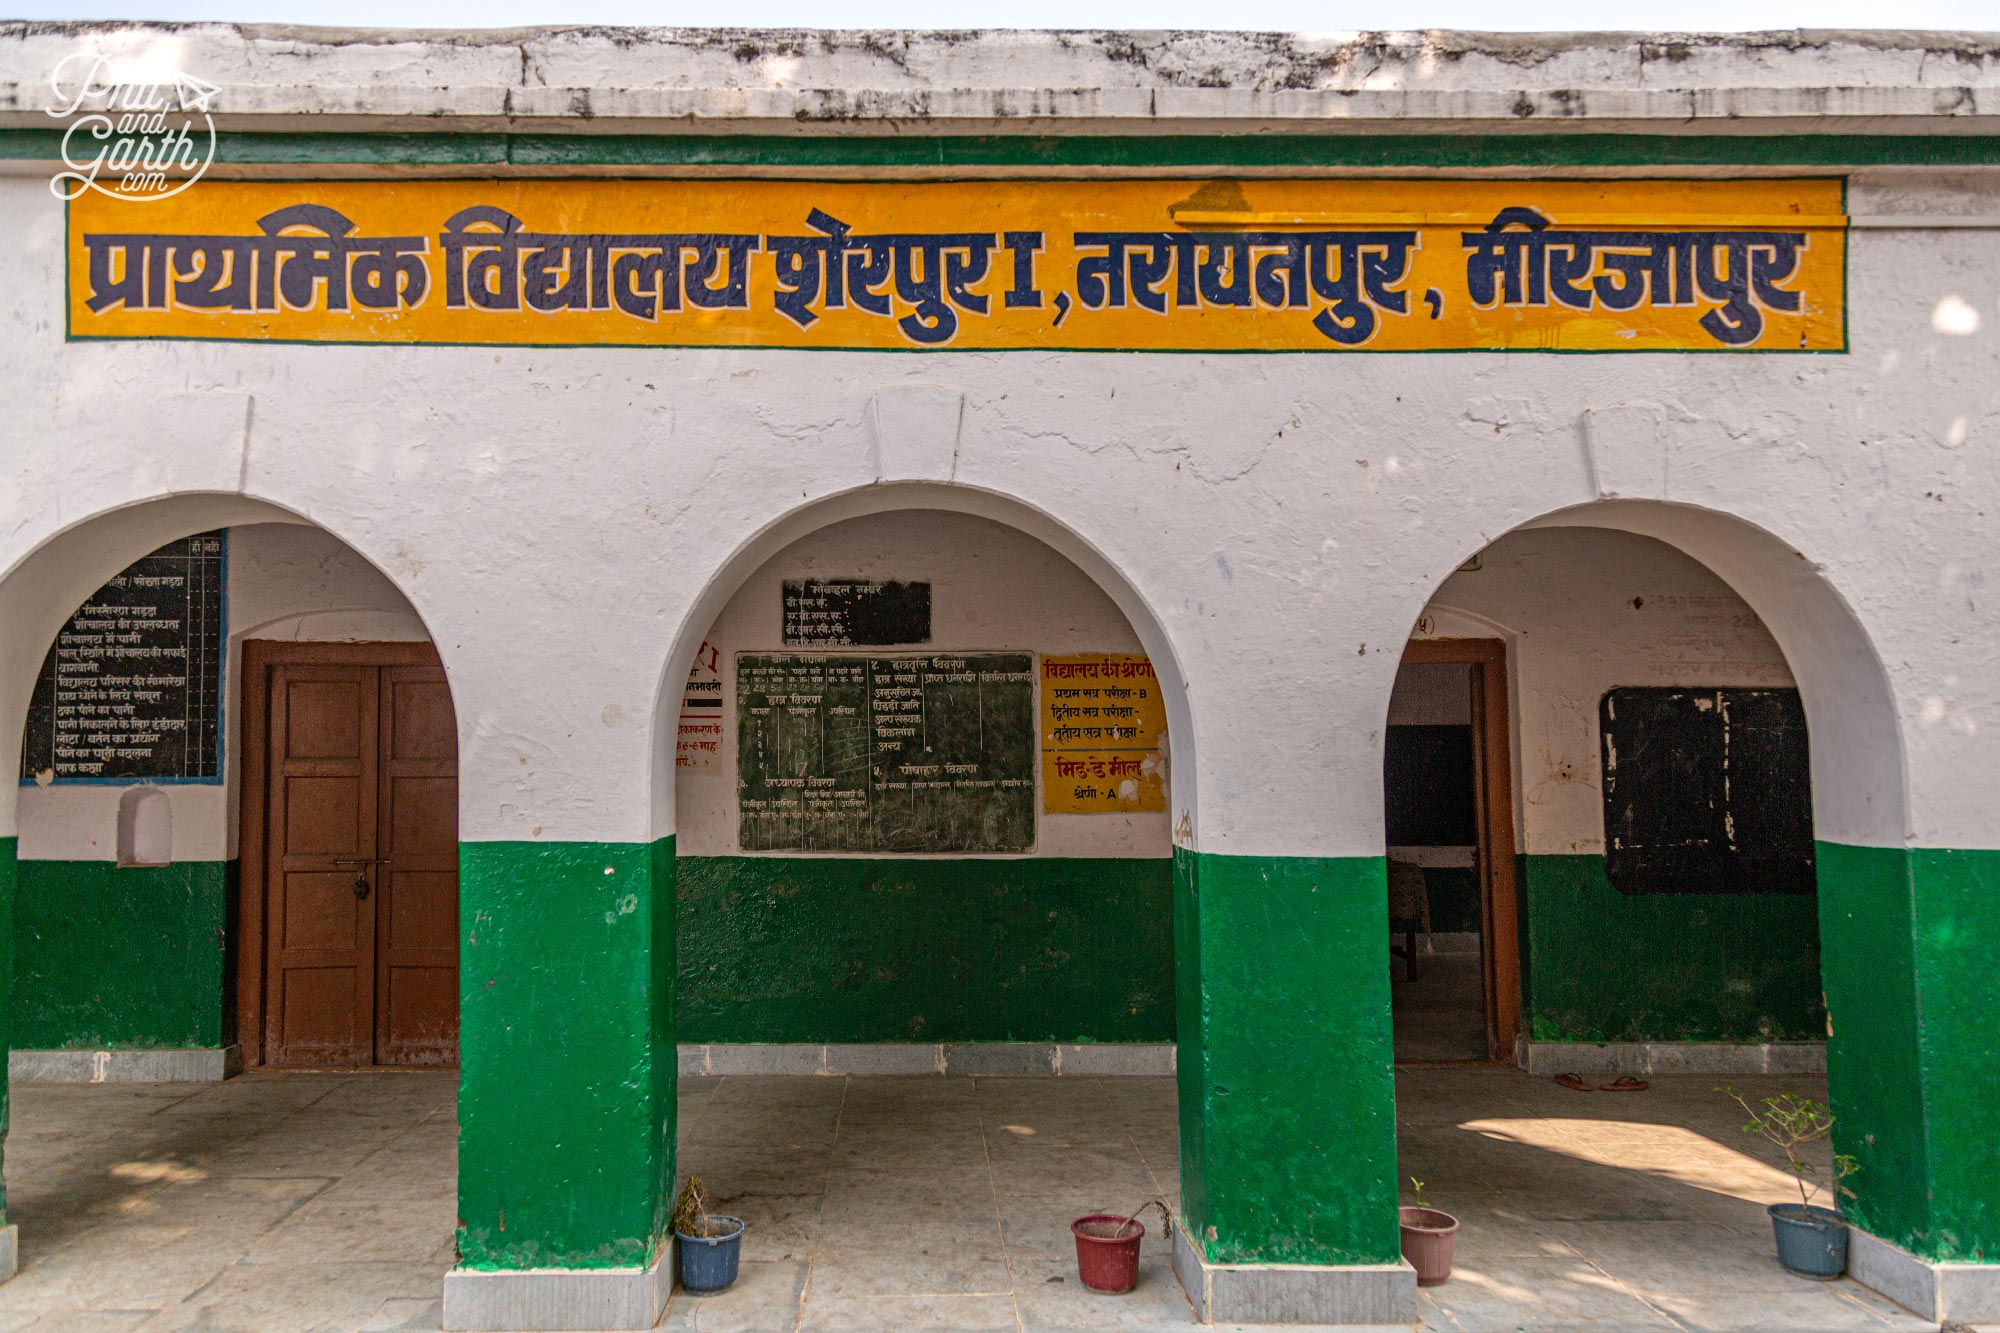 Entrance to the village school